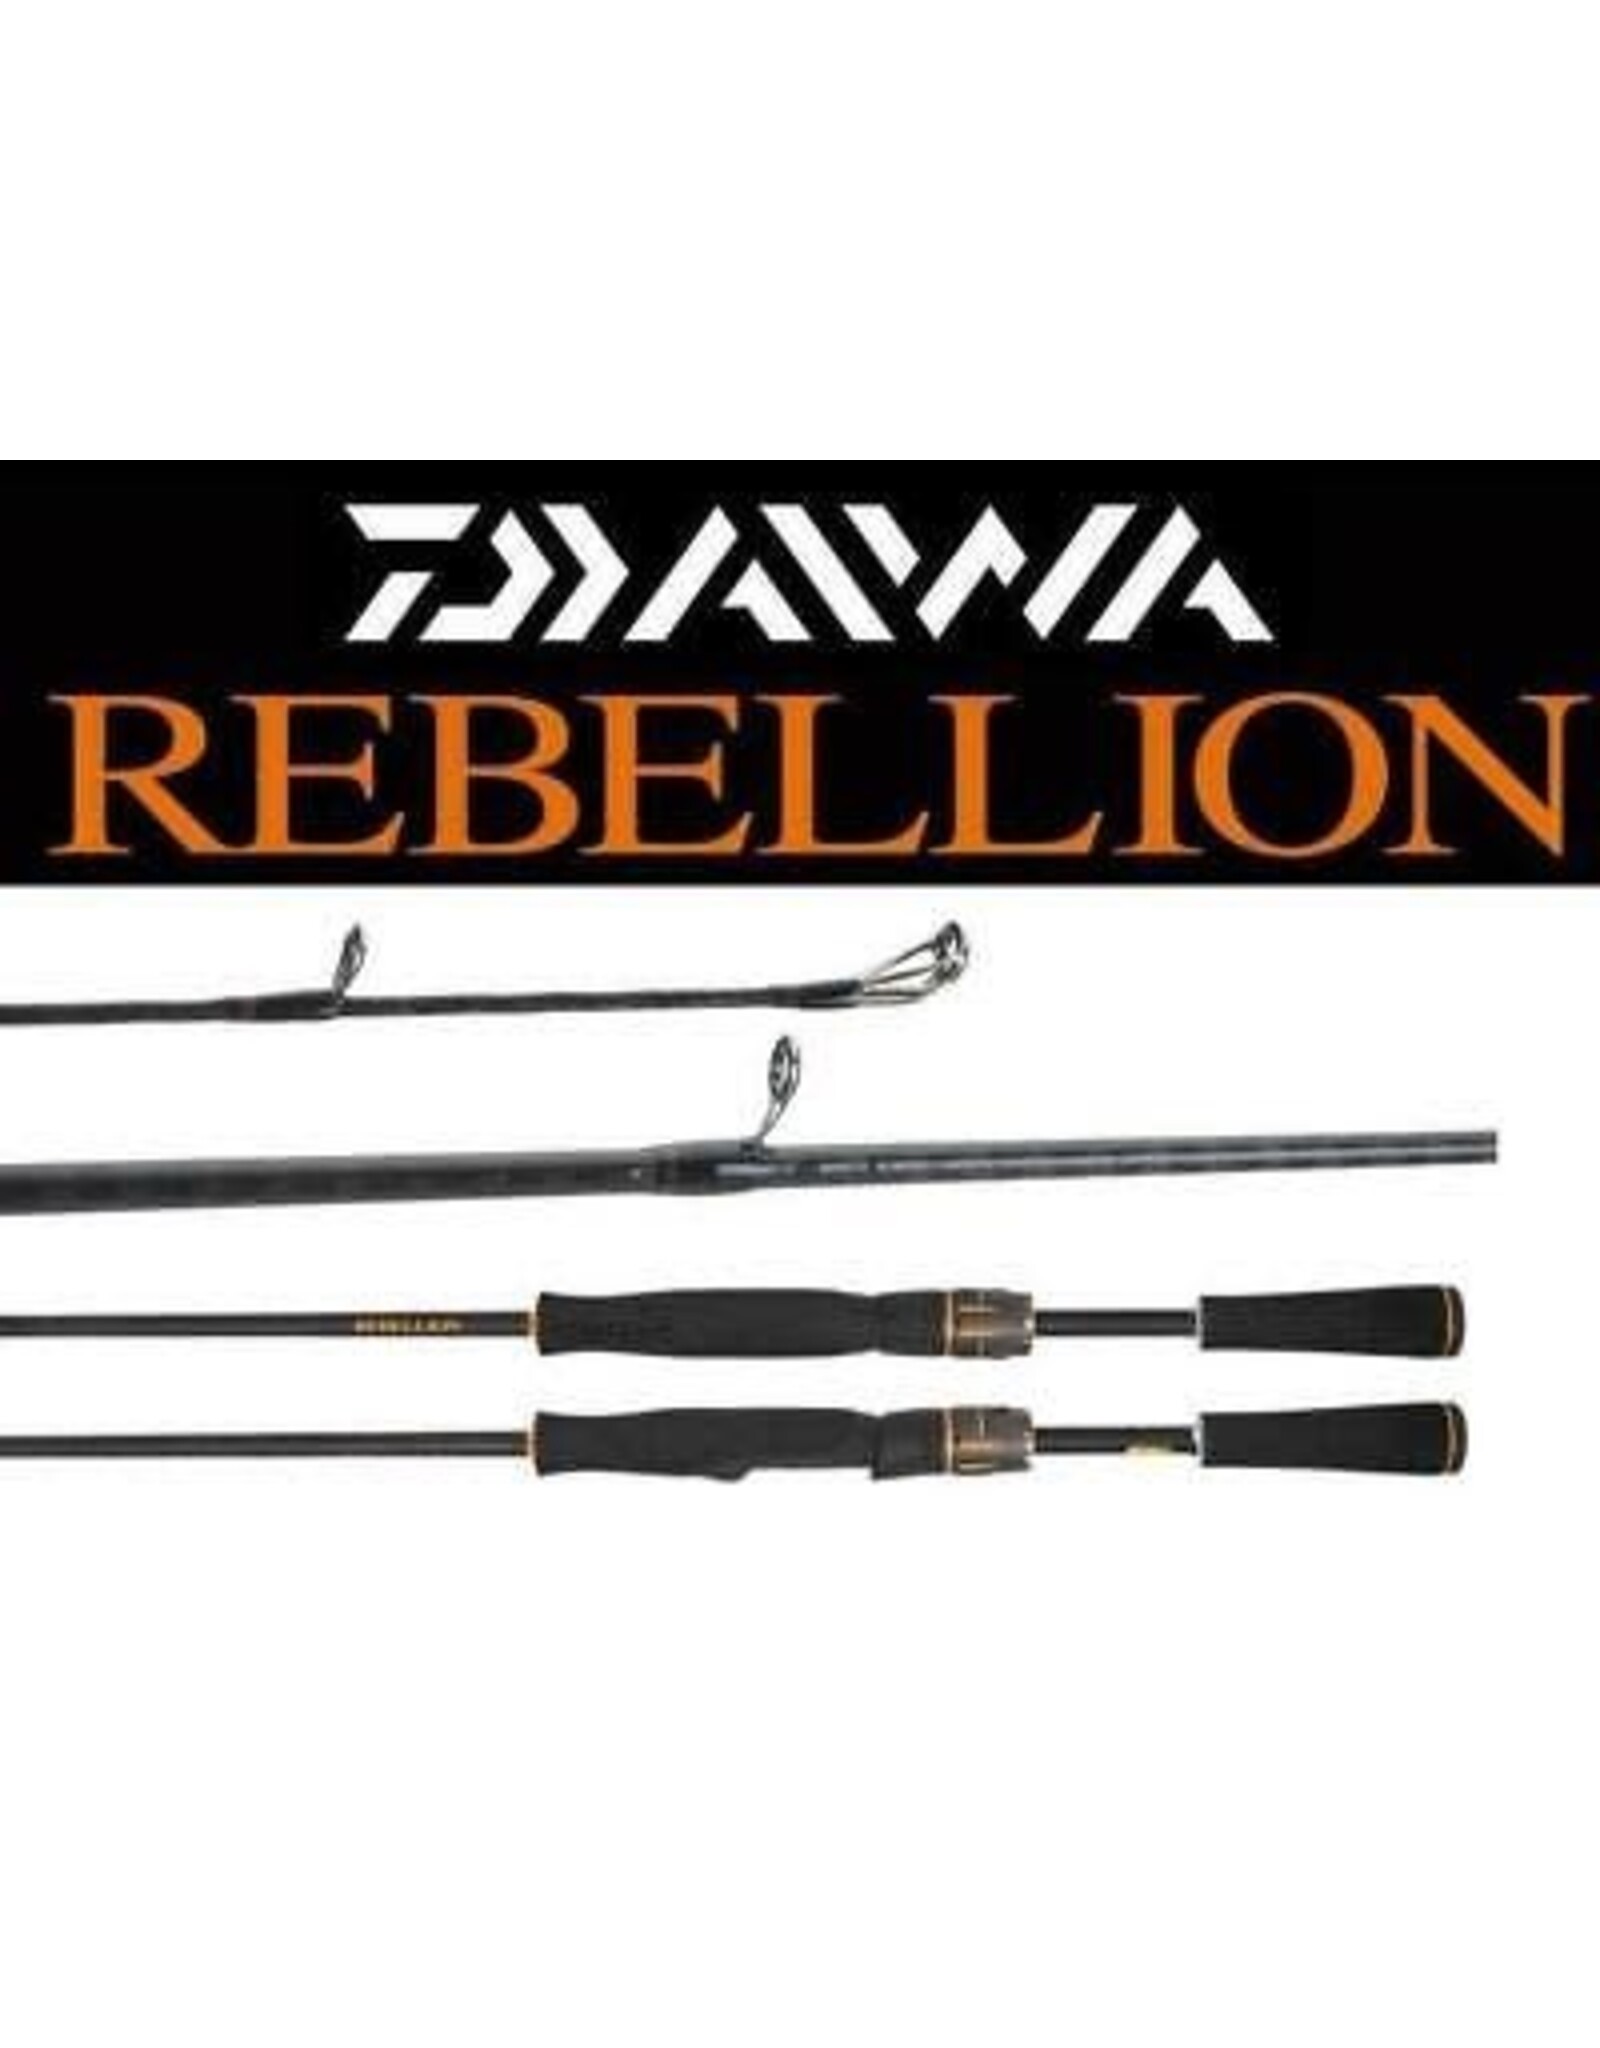 Daiwa Rebellion Spinning Rod, 7'1 Length, Medium Light Power, Fast Action  - Bronson